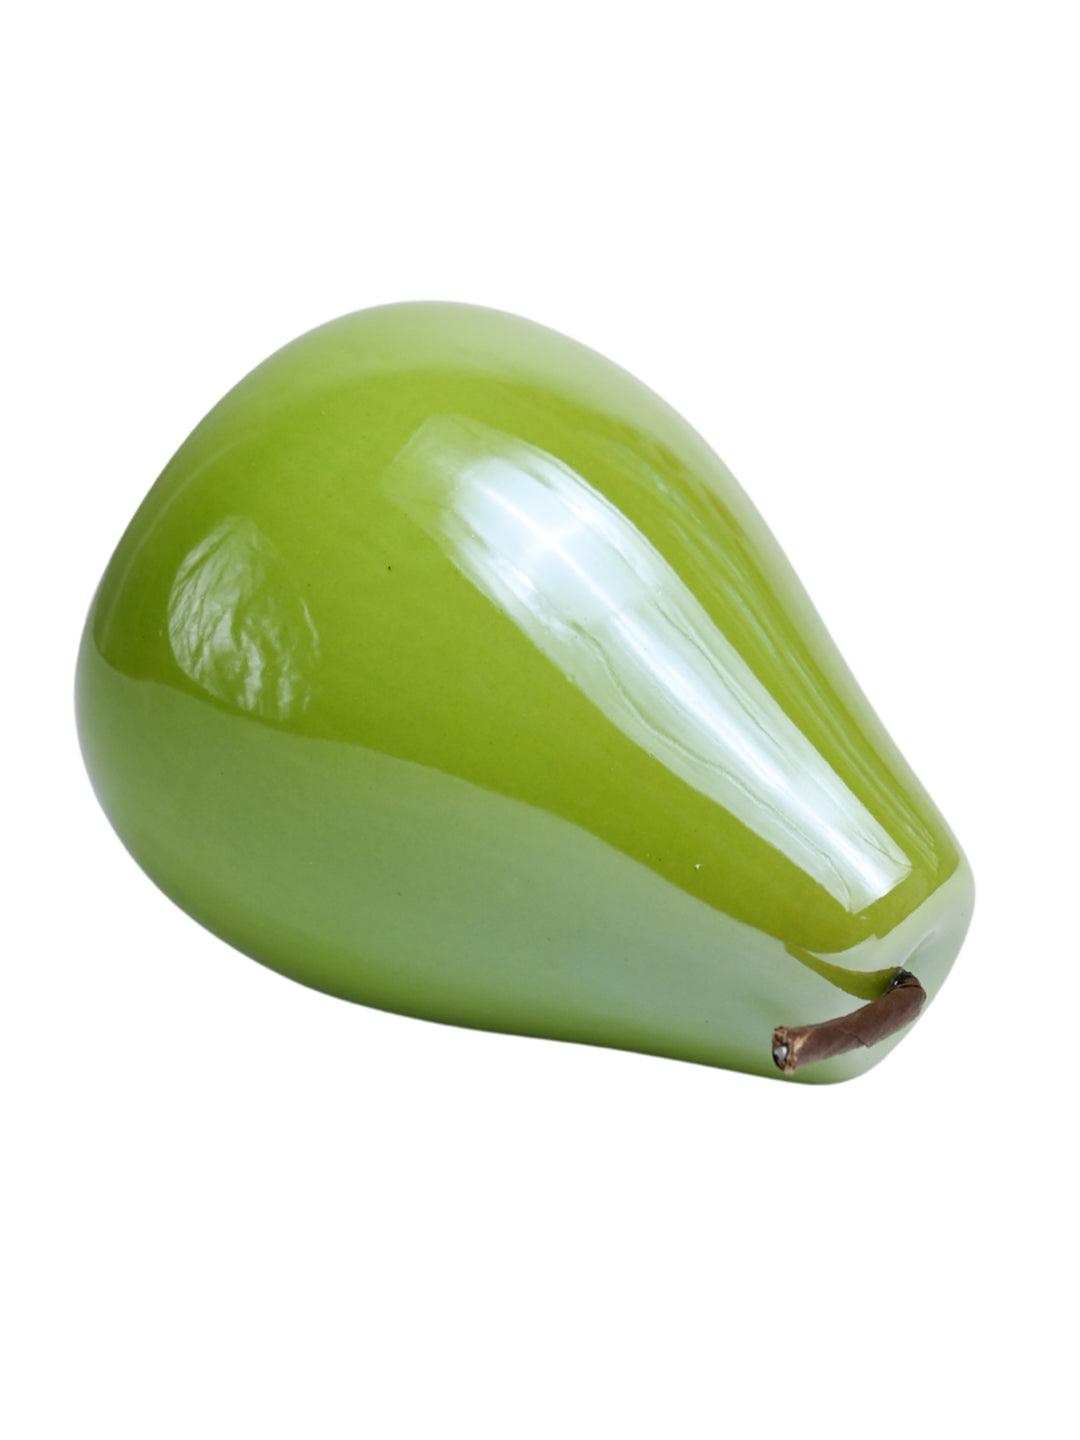 VON CASA Decorative Pear - Ceramic, Green - MARKET99